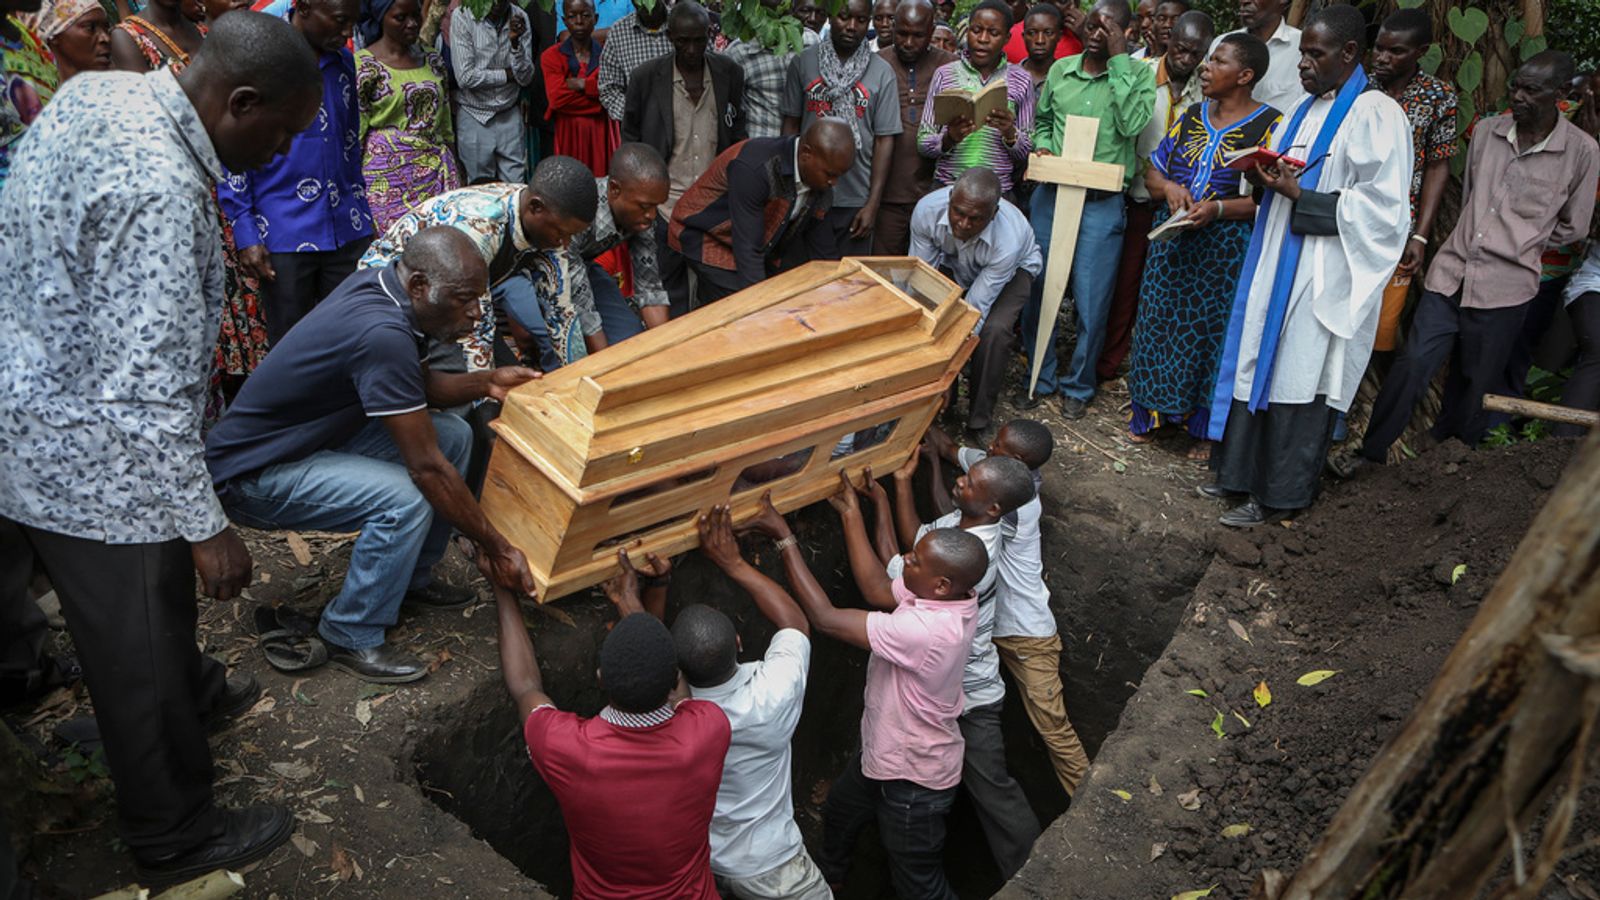 Uganda school attack: Families begin burying loved ones after atrocity leaves 42 dead